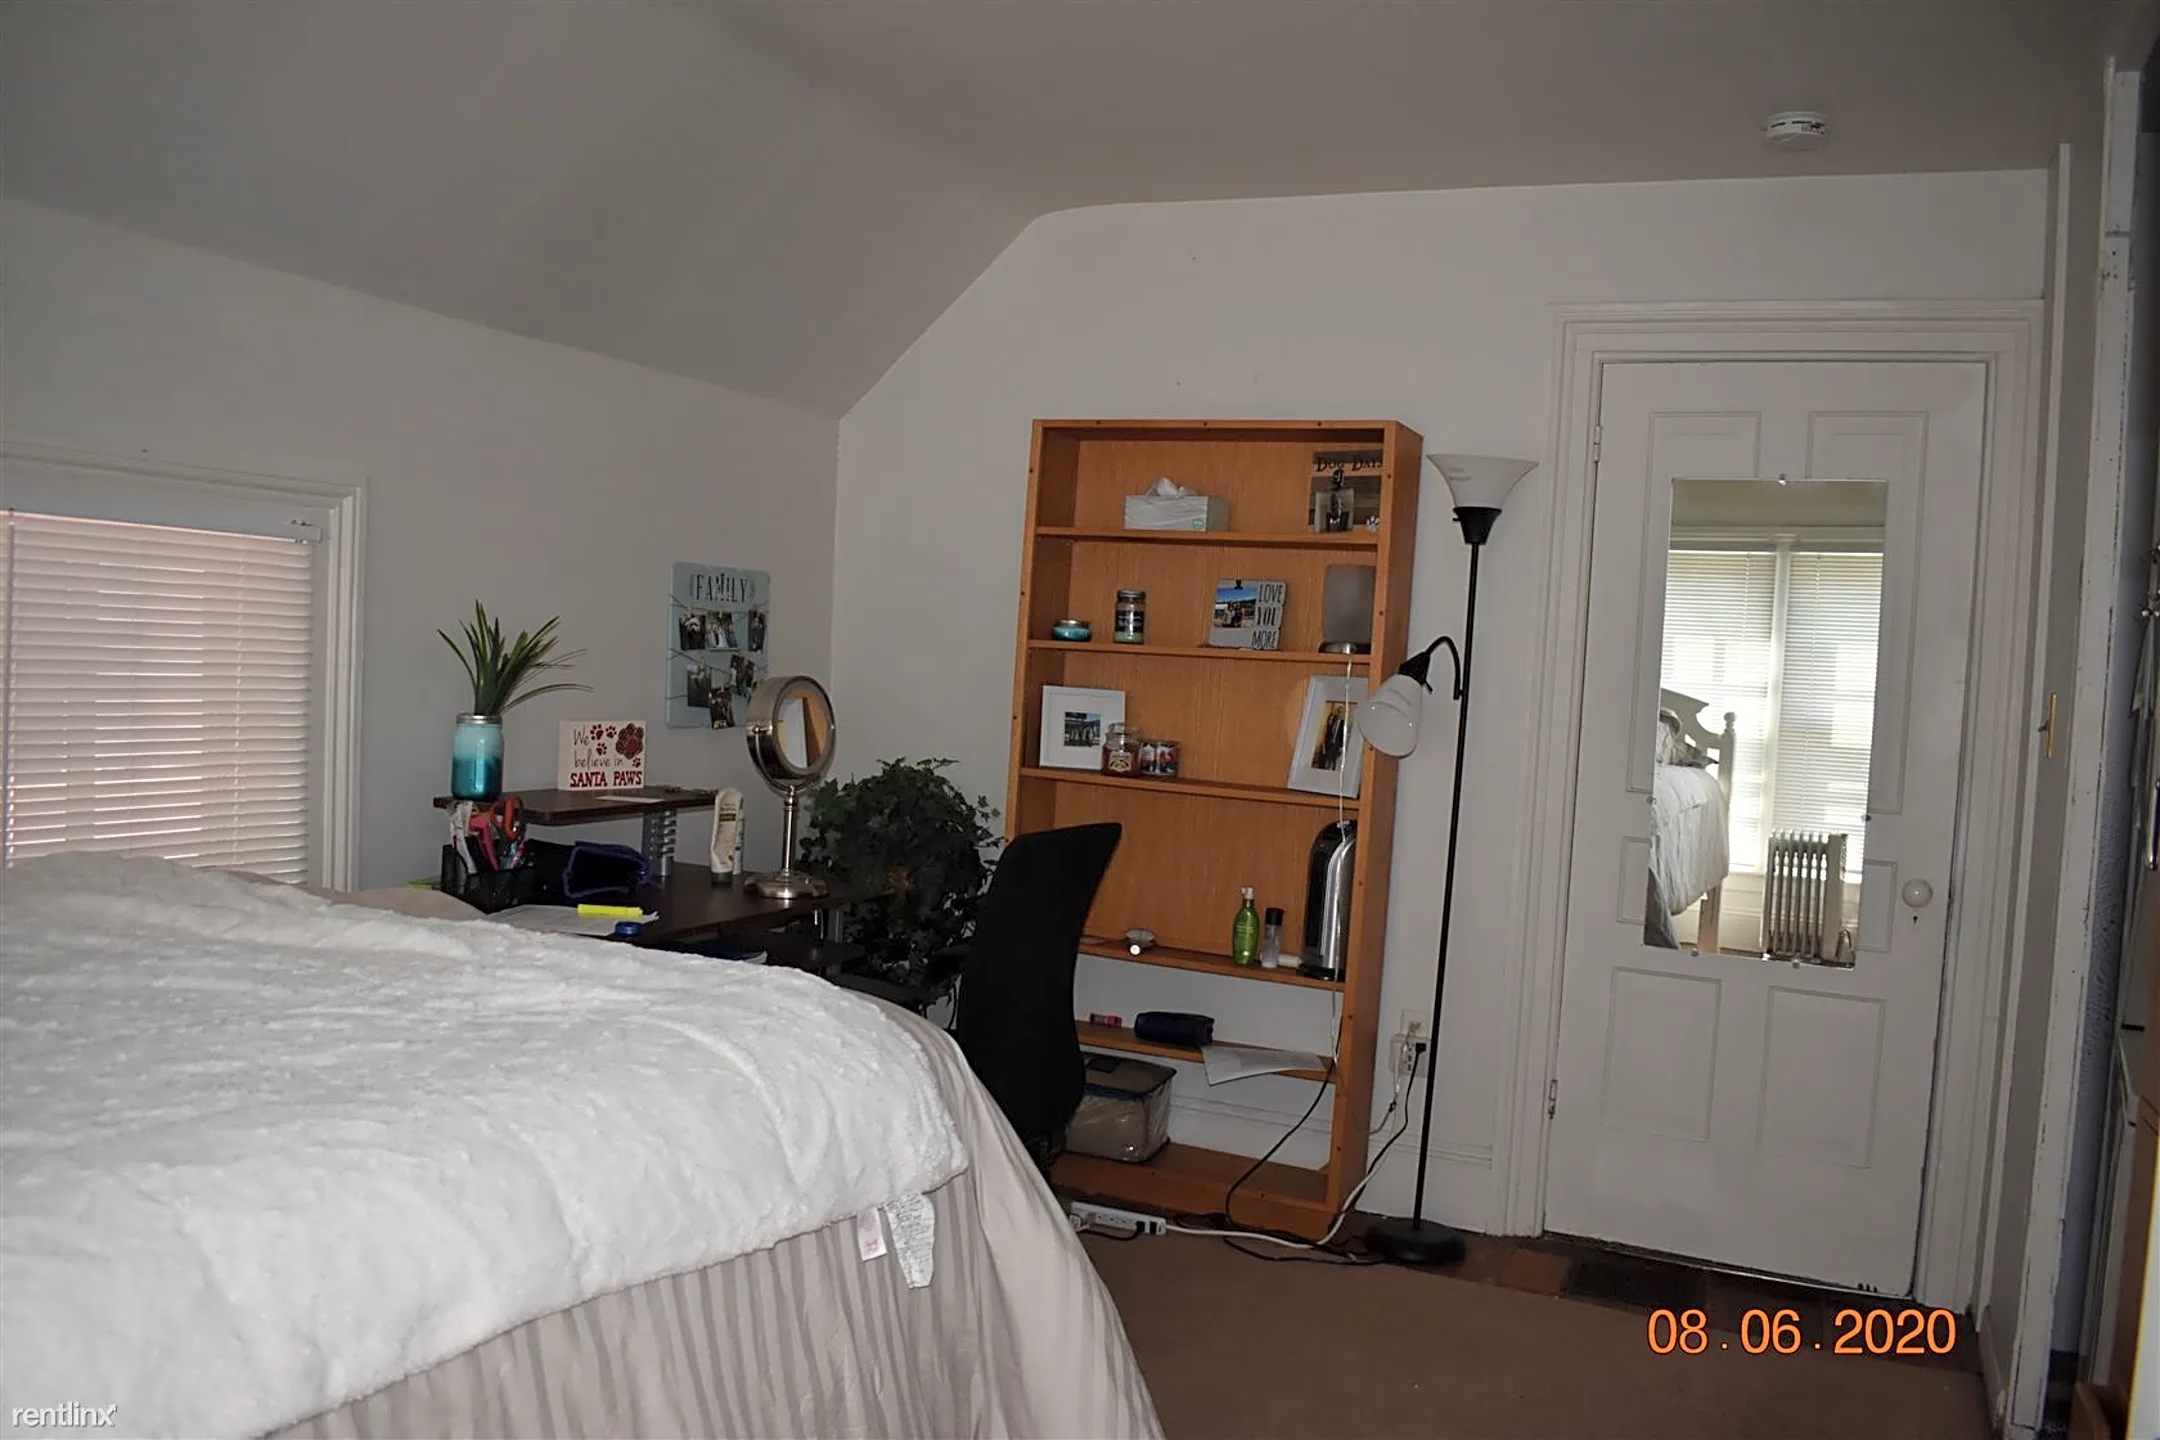 Bedroom - 537 Elizabeth St - Ann Arbor, MI